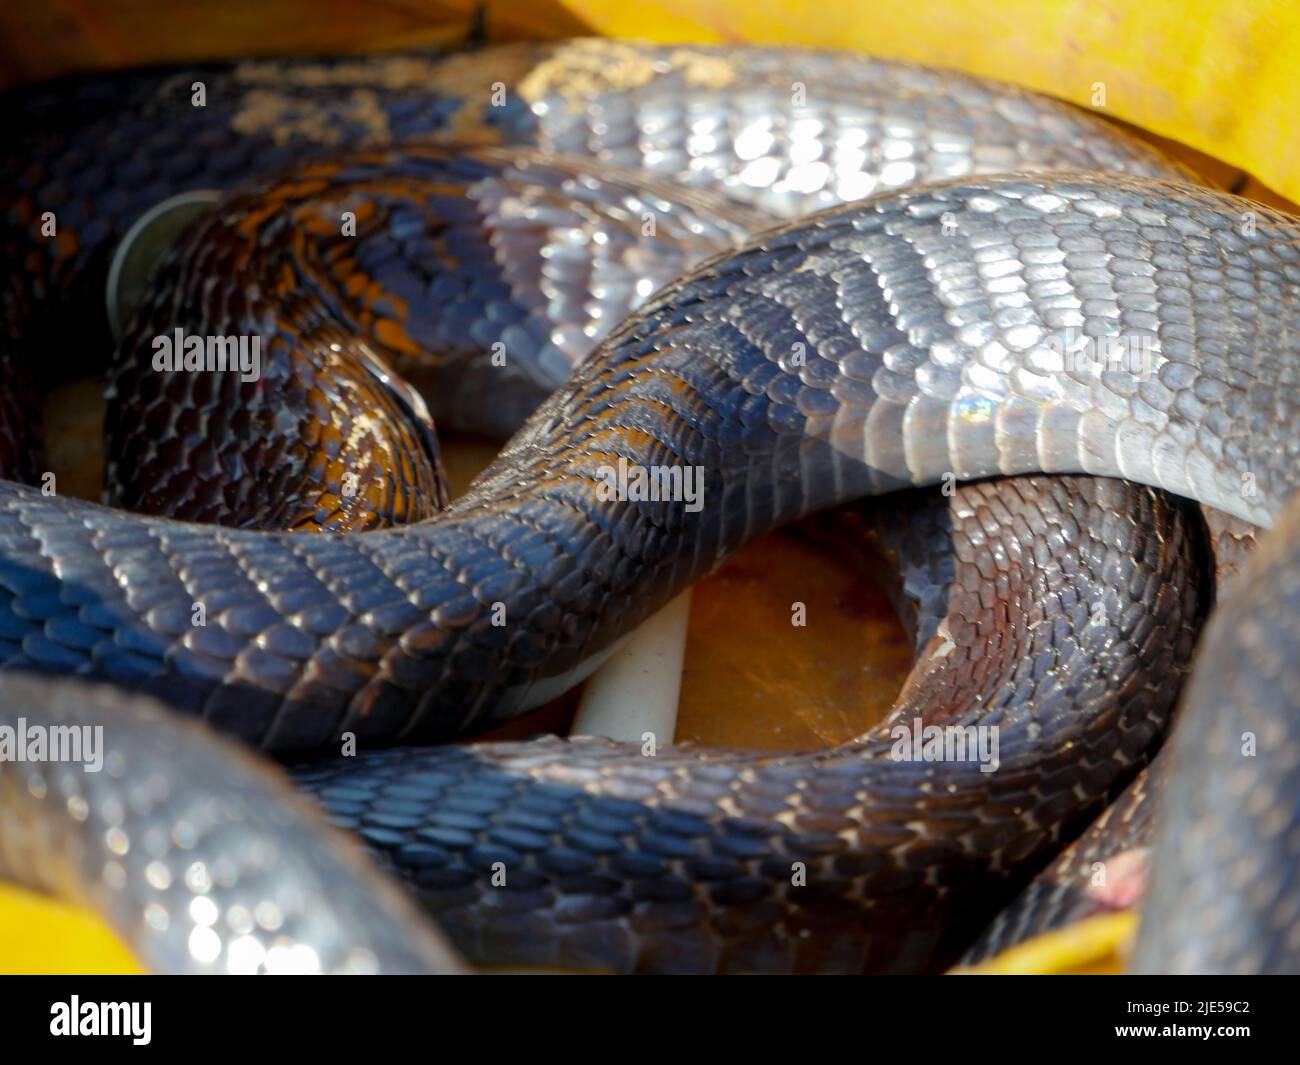 Cobra Snake Nahaufnahme Bild, in einen Korb gelegt Stockfoto